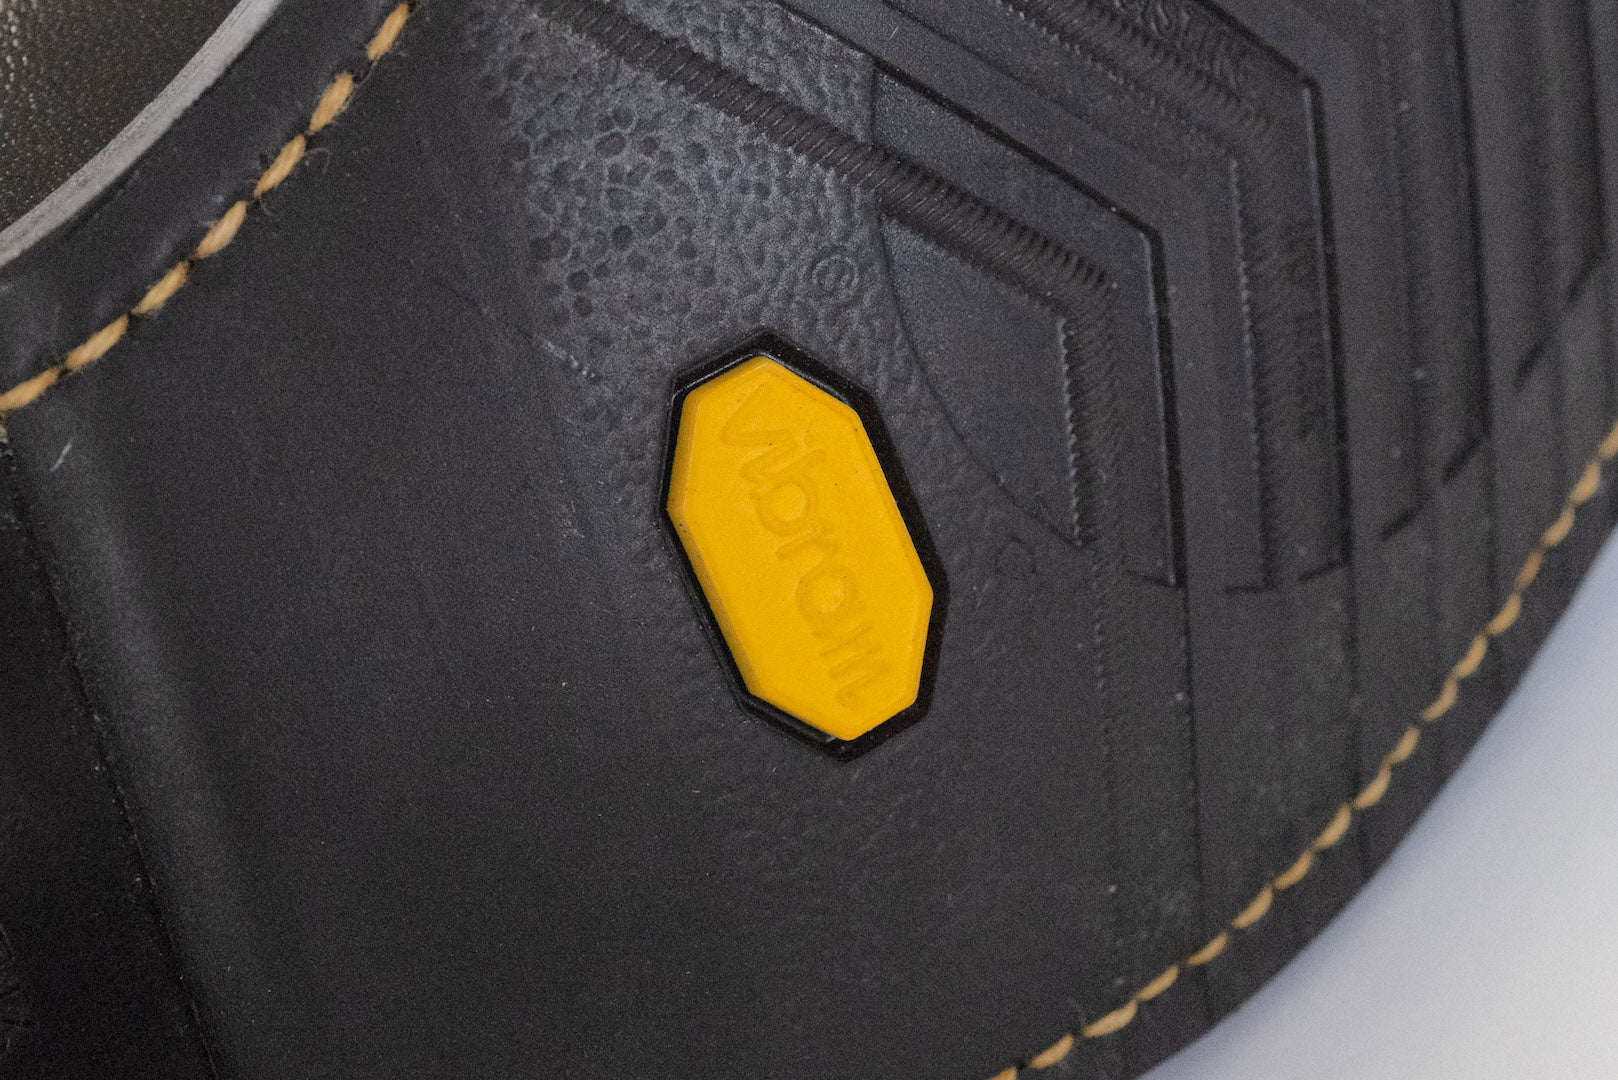 The Flat Head Horsehide Serviceman Shoes (Black Tea-core)